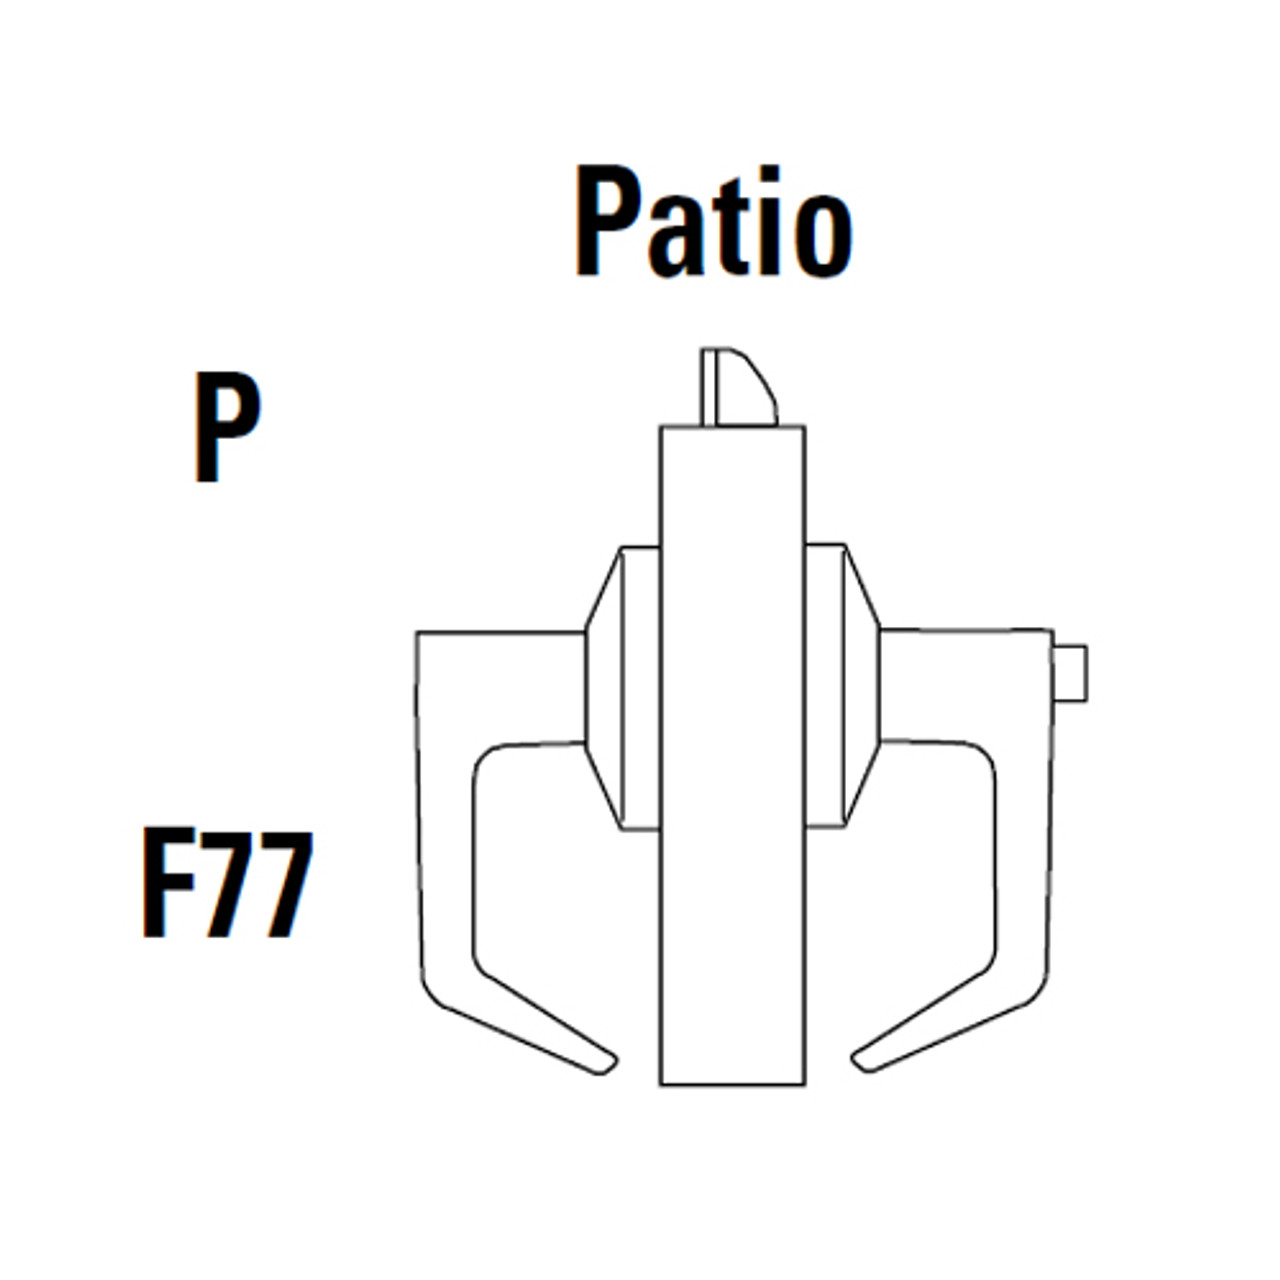 9K30P14KSTK625 Best 9K Series Patio Heavy Duty Cylindrical Lever Locks in Bright Chrome